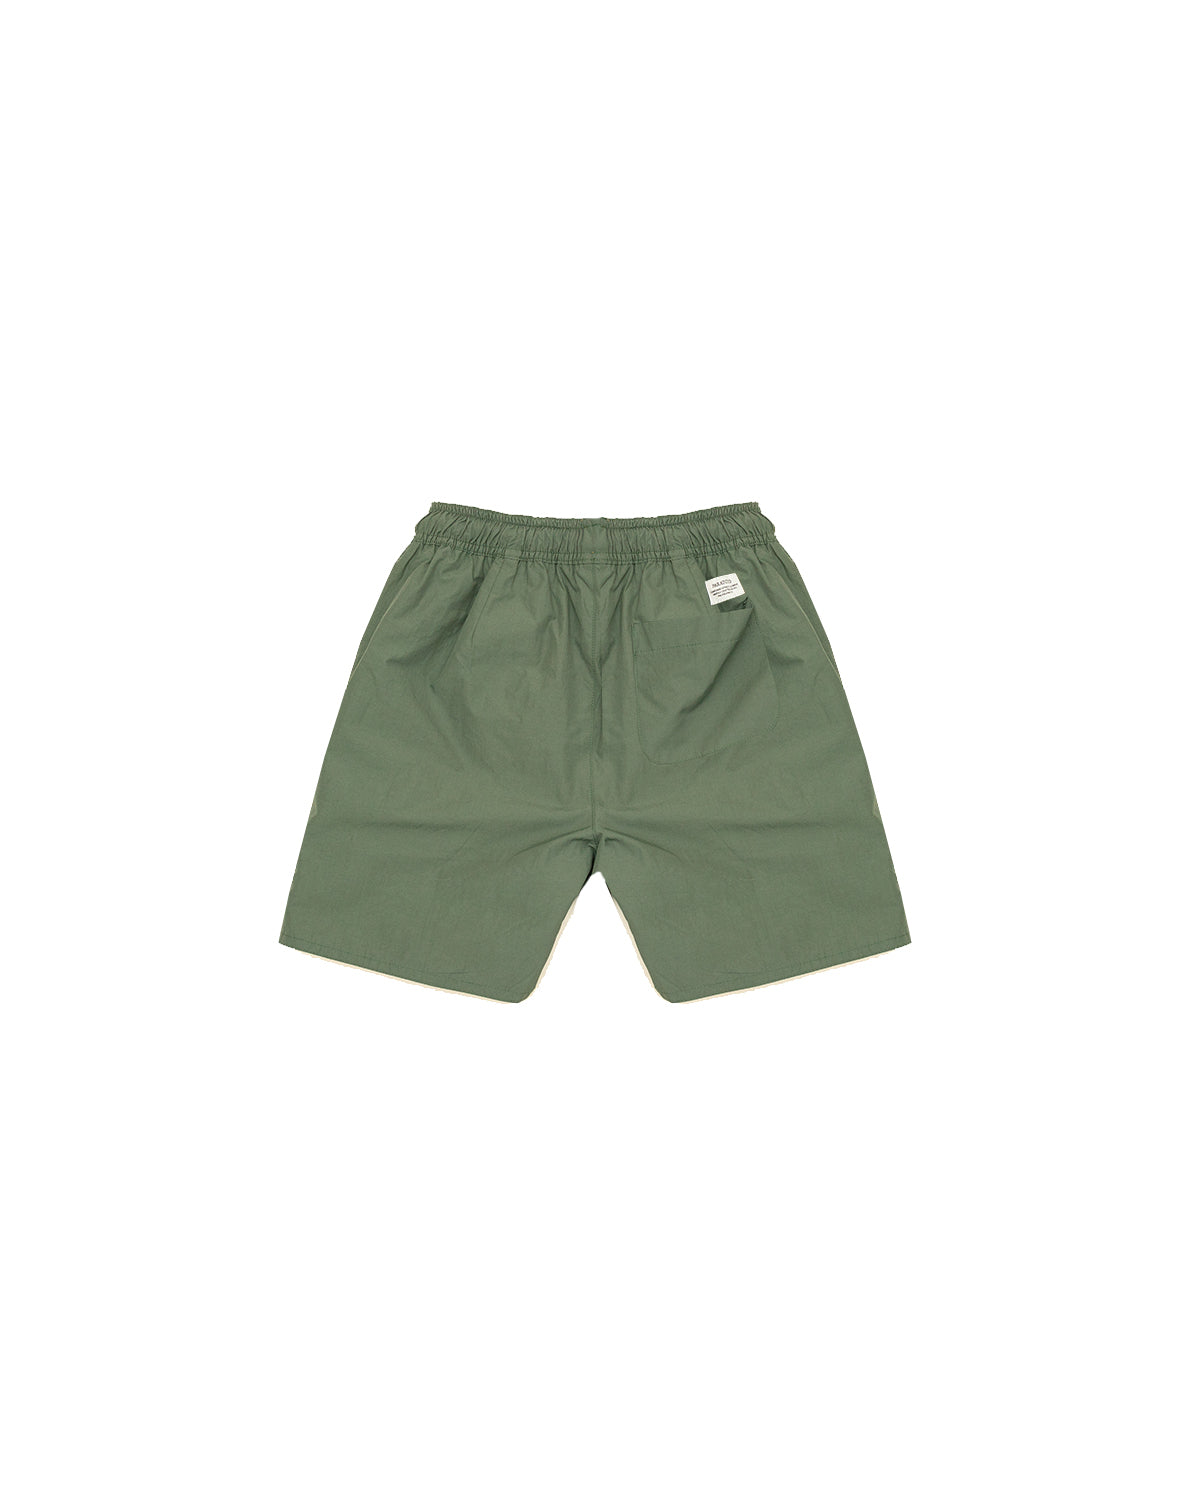 Reversible Pareja Shorts - Lichen/Gold